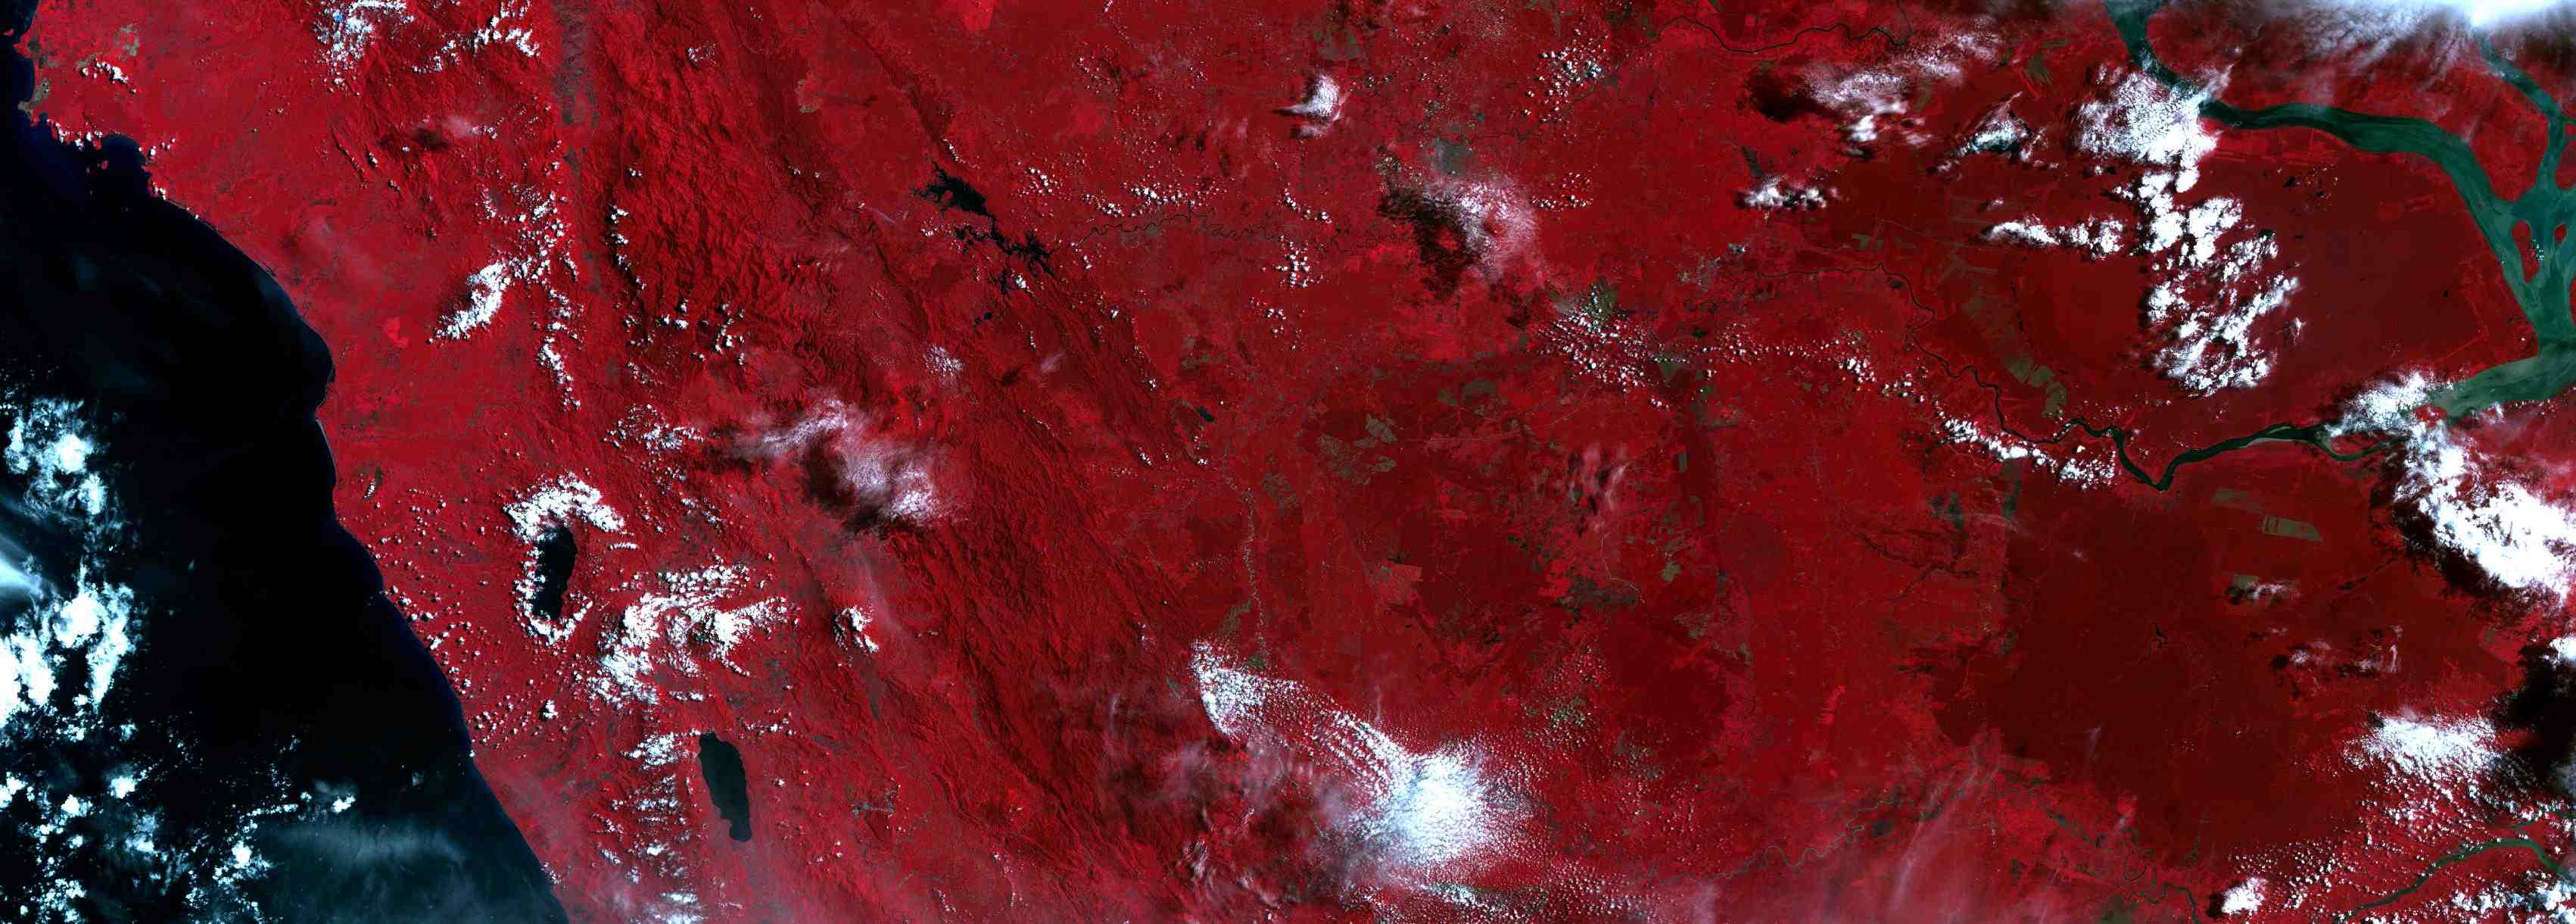 Central Sumatra. UK-DMC-1 satellite image å© 2009 SSTL, all rights reserved, supplied by DMCii.